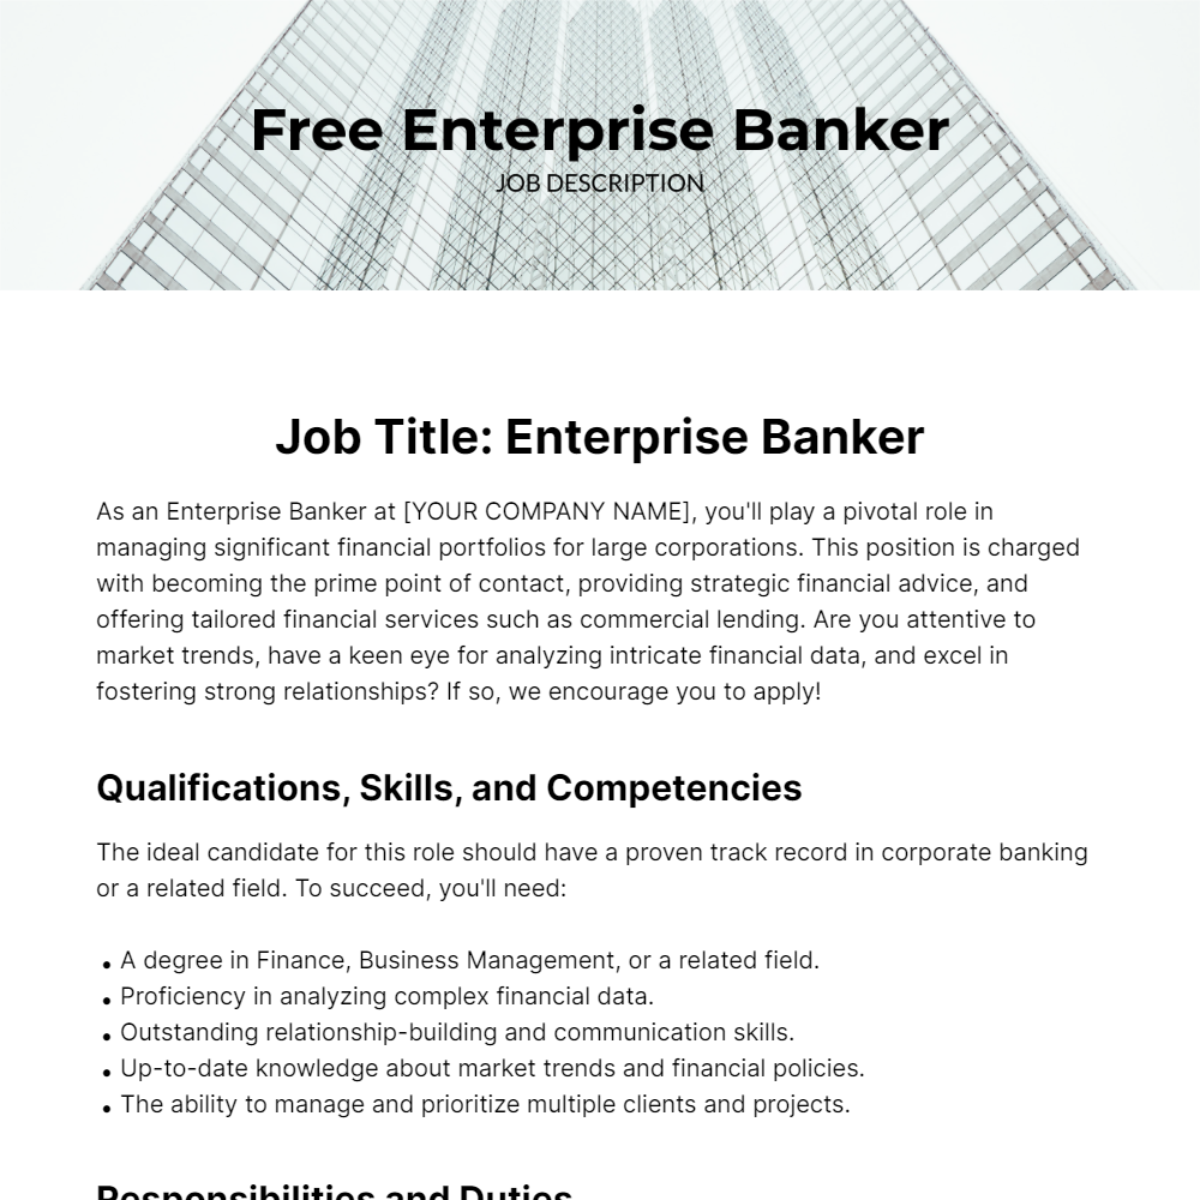 Free Enterprise Banker Job Description Template